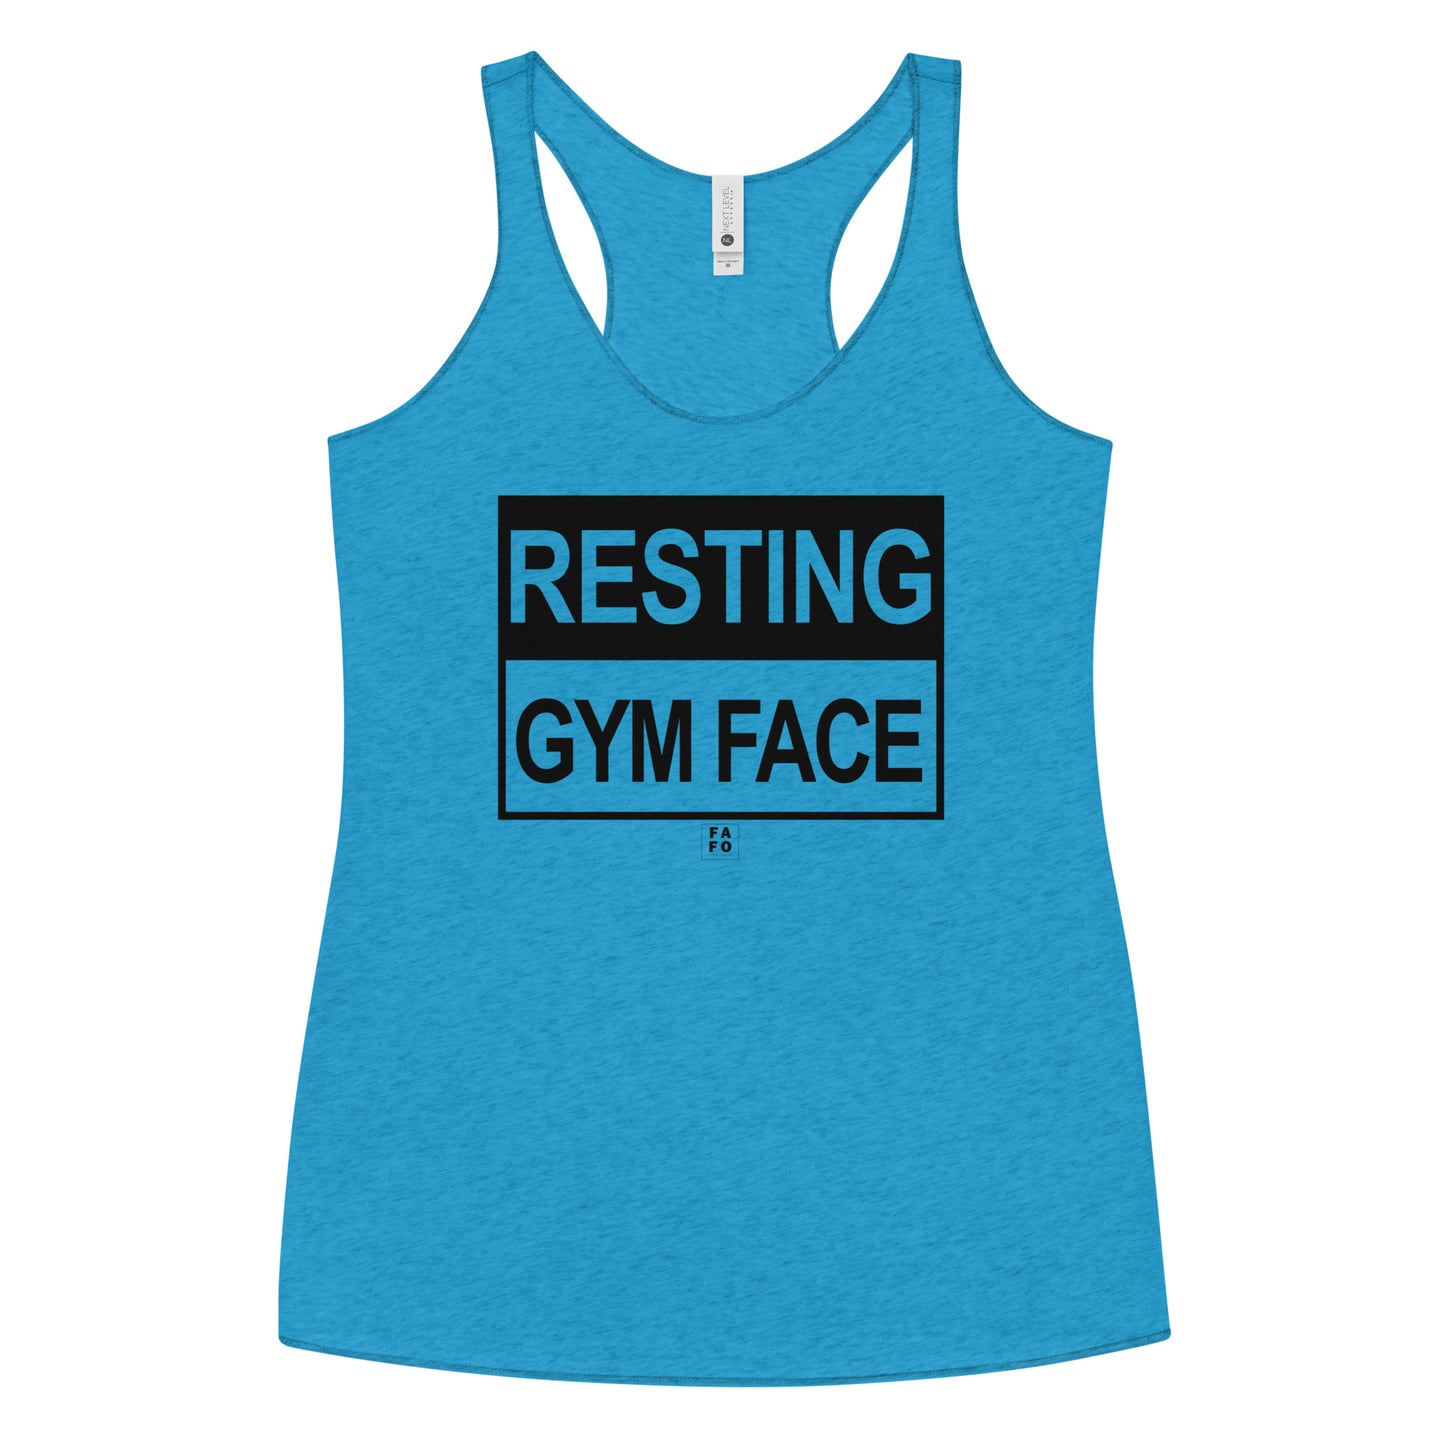 Next Level Racerback Tank - Resting Gym Face - FAFO Sportswear